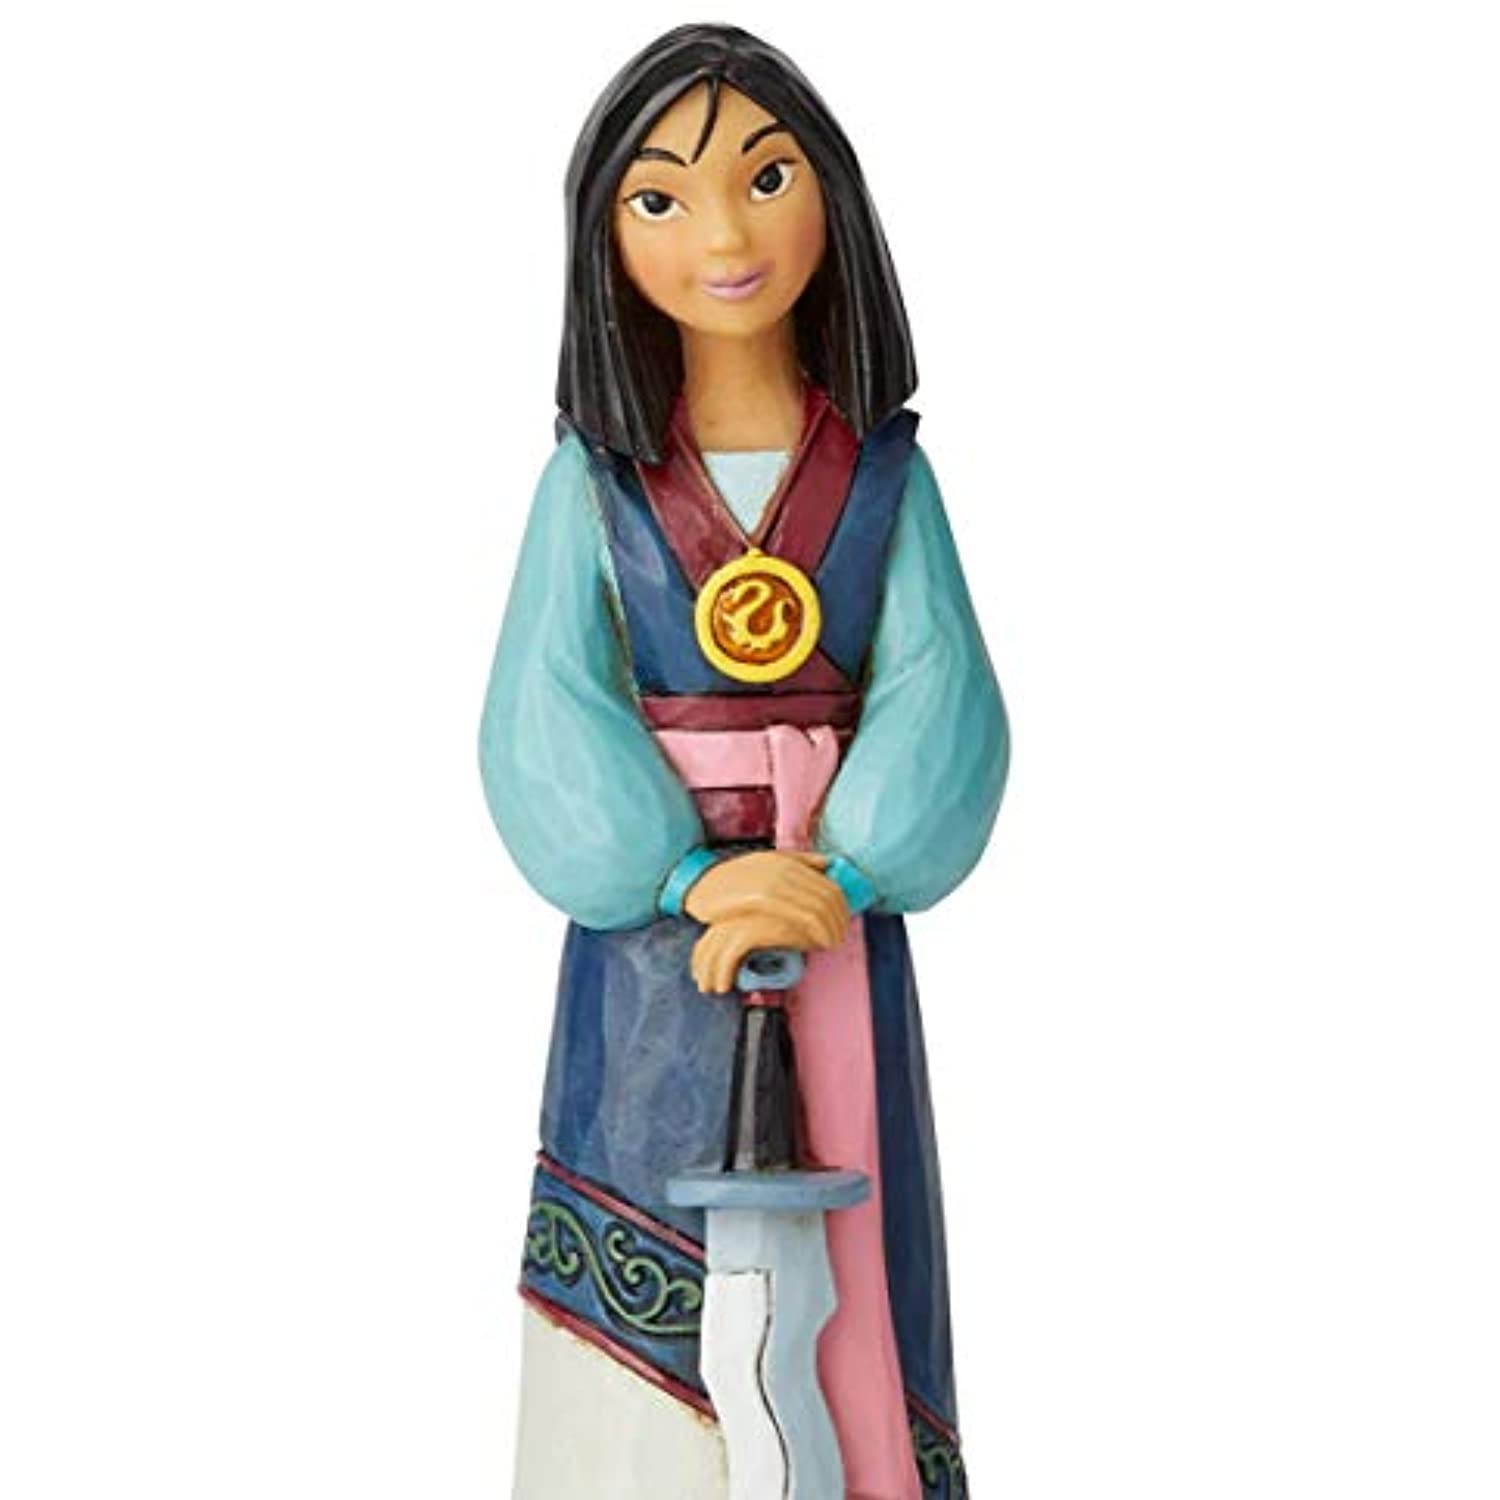 Enesco Disney Traditions by Jim Shore Princess Passion Mulan Figurine, 7.25 Inch, Multicolor